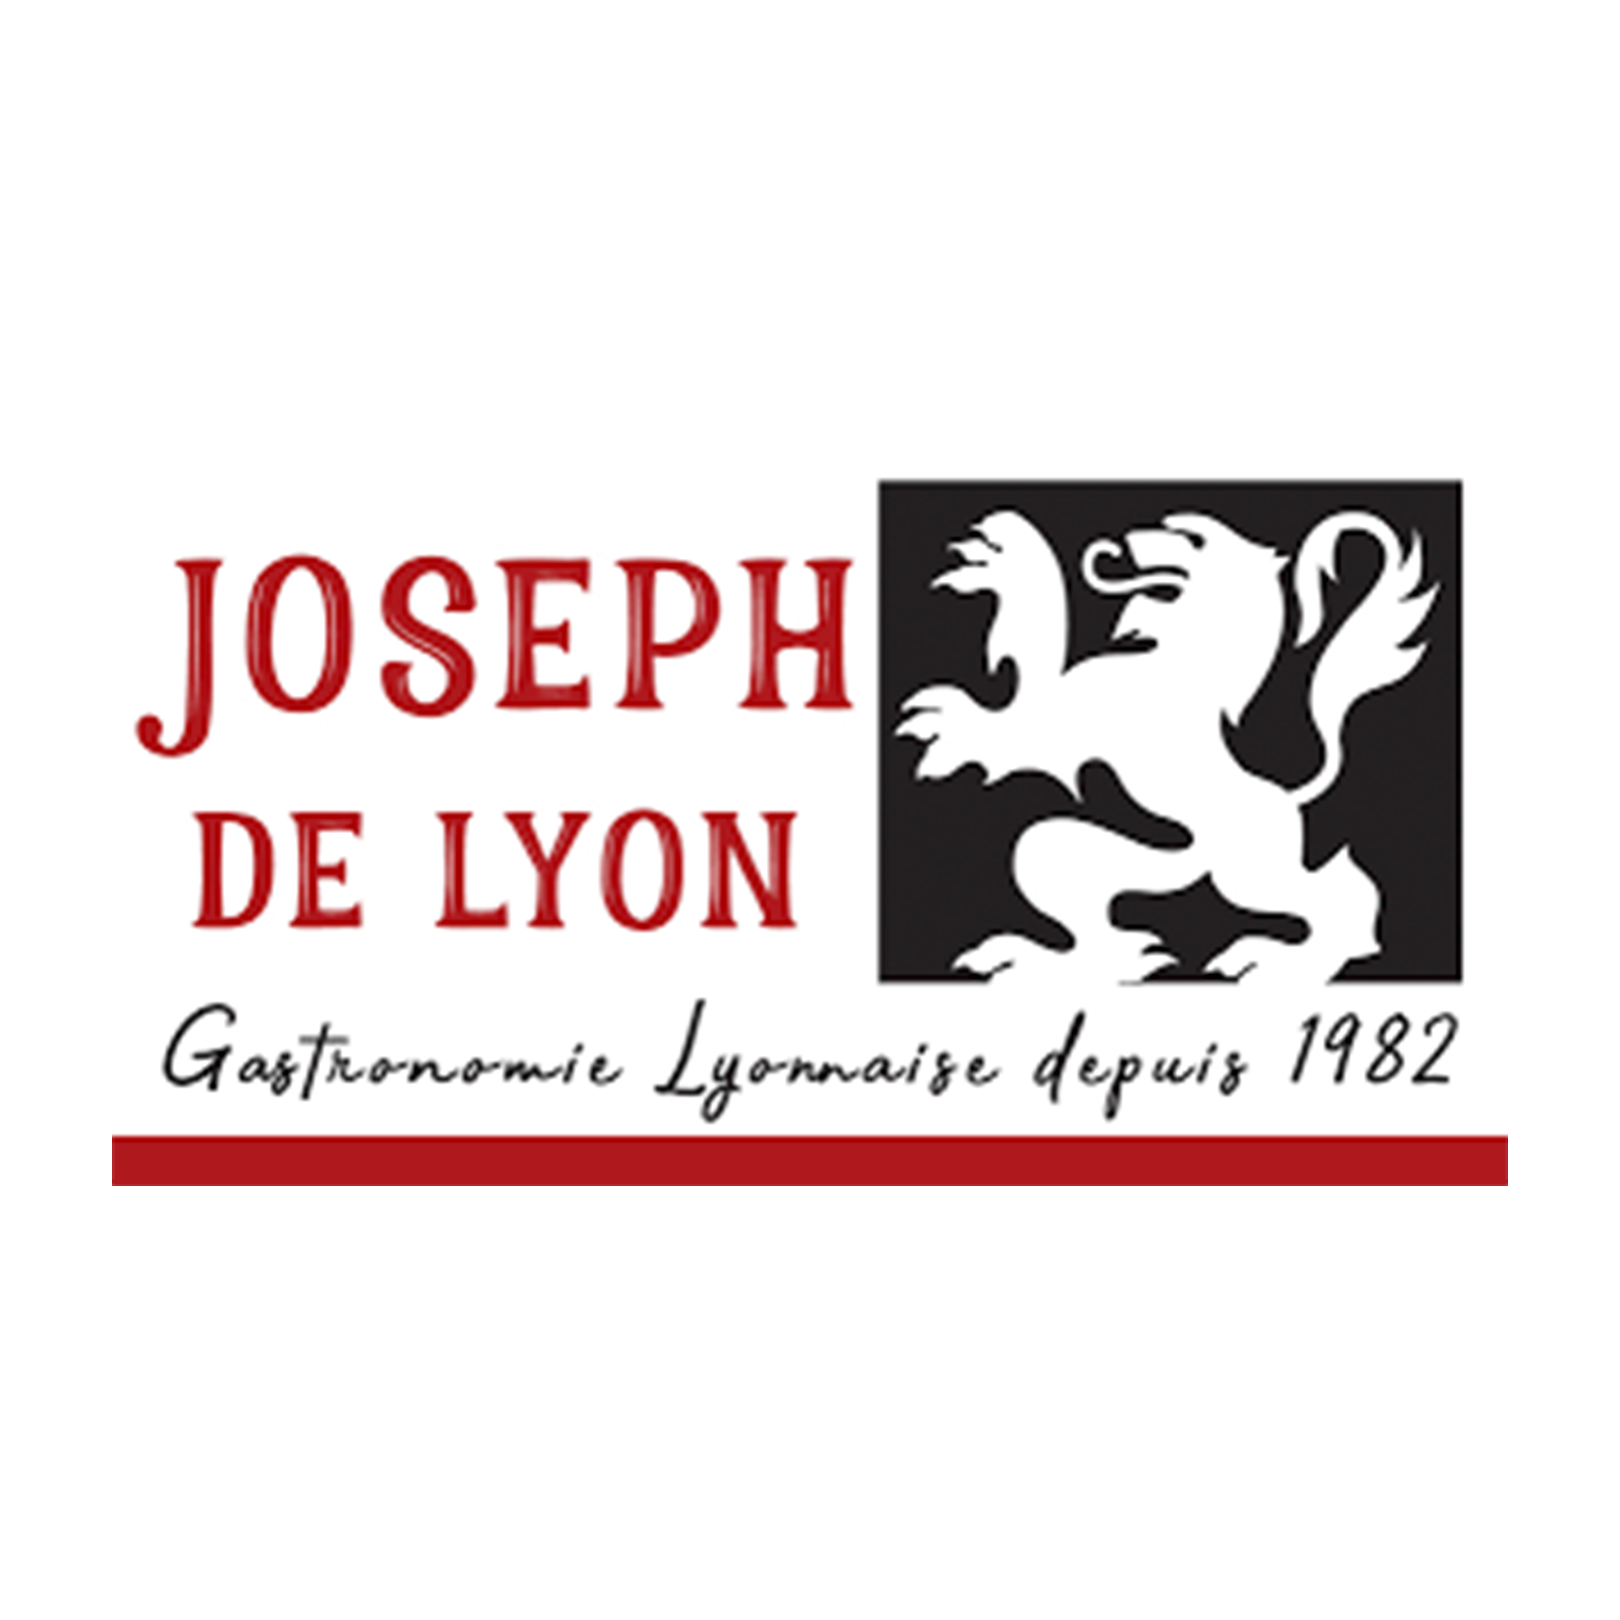 JOSEPH DE LYON